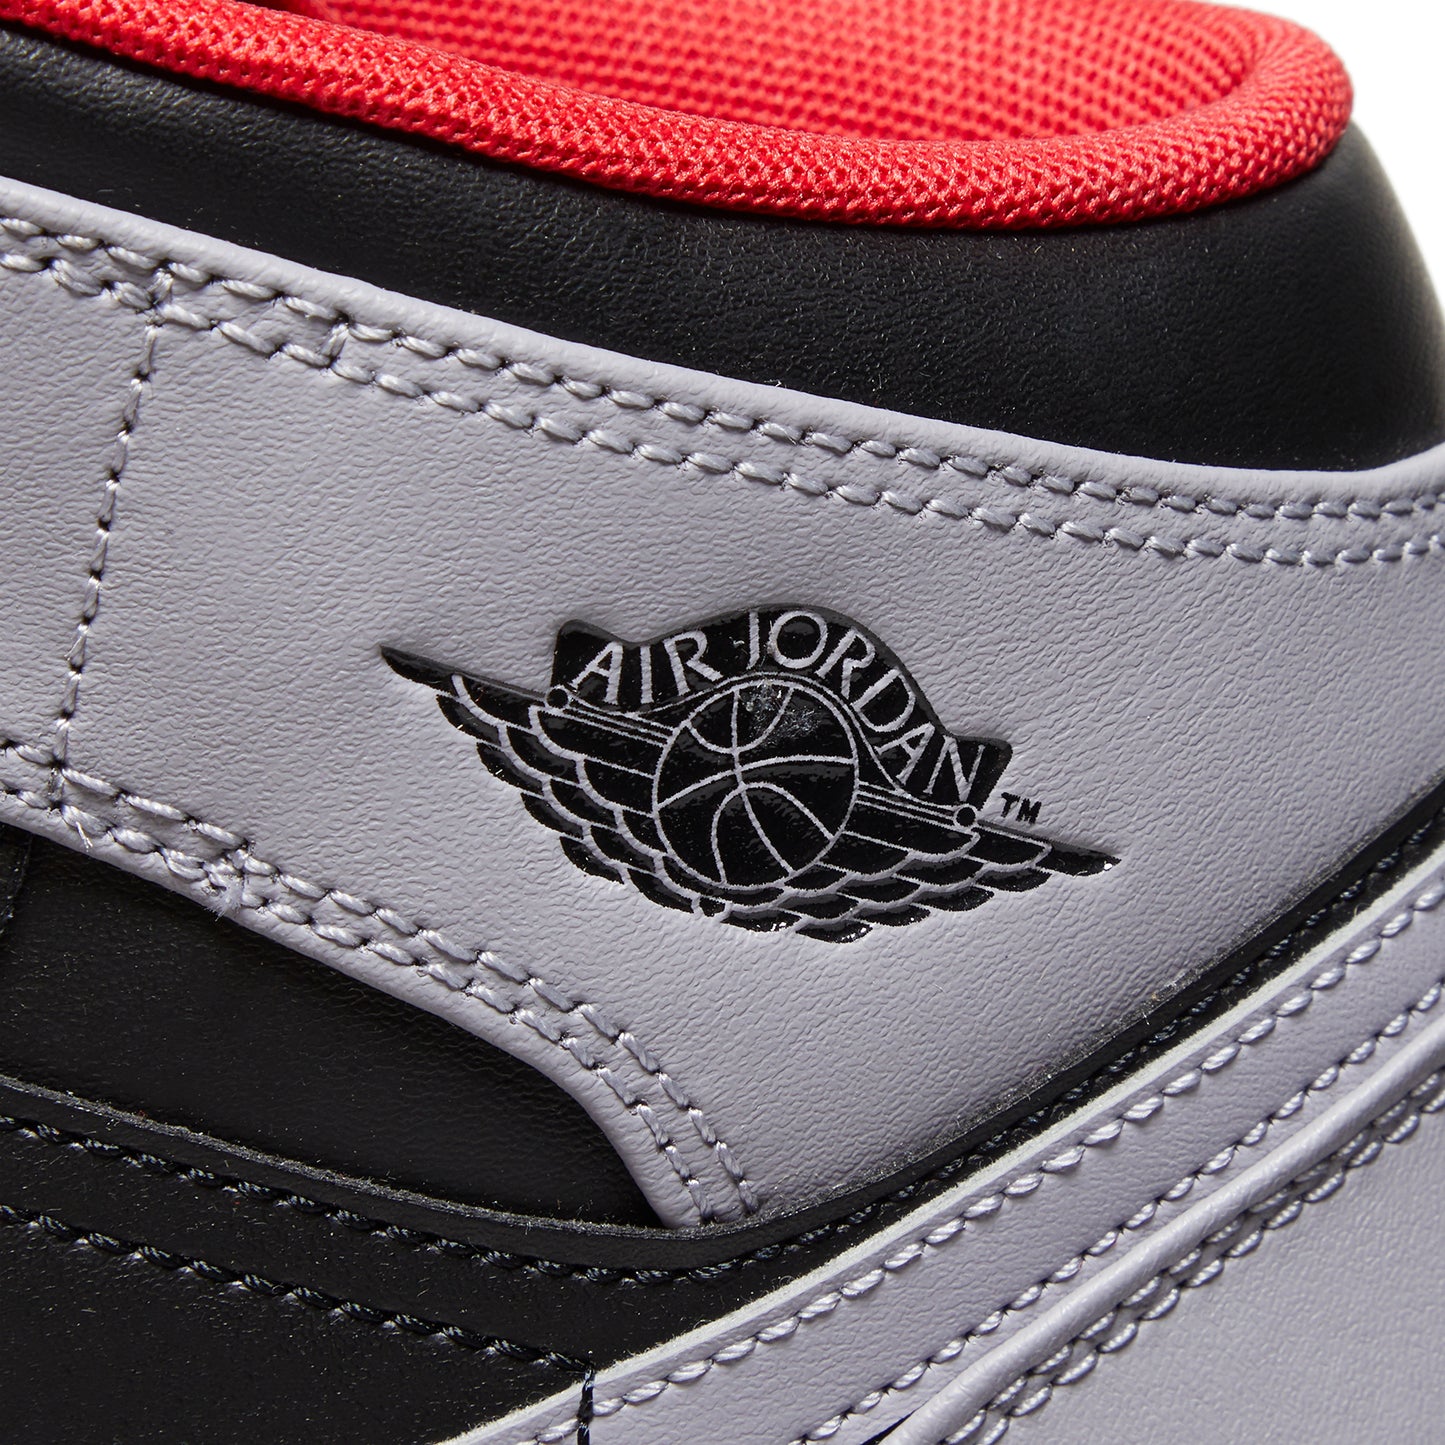 Nike Kids Air Jordan 1 Mid (Black/Cement Grey)